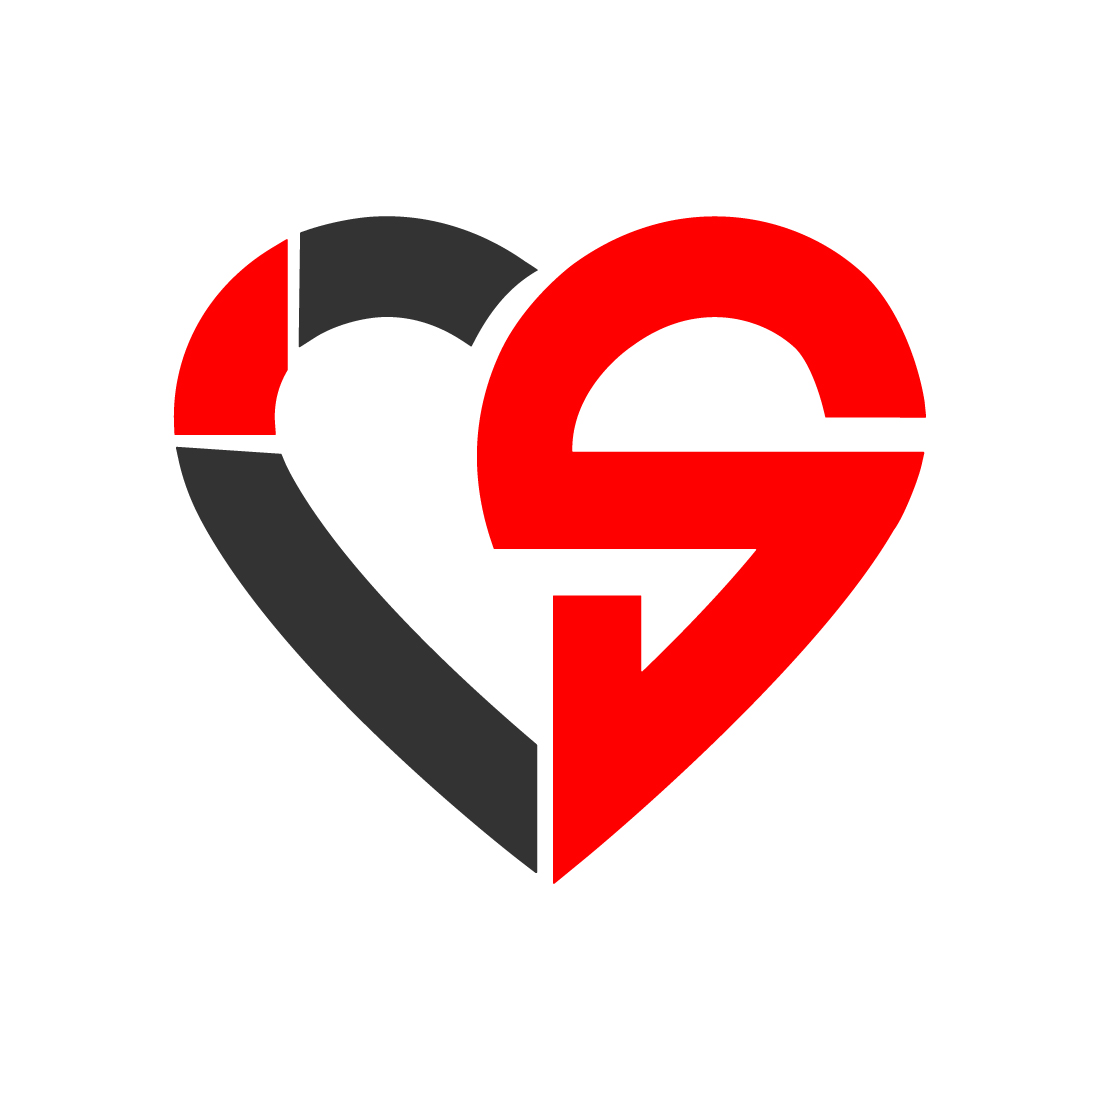 Initials IS letters logo design Love logo design vector icon IS love logo best icon design preview image.